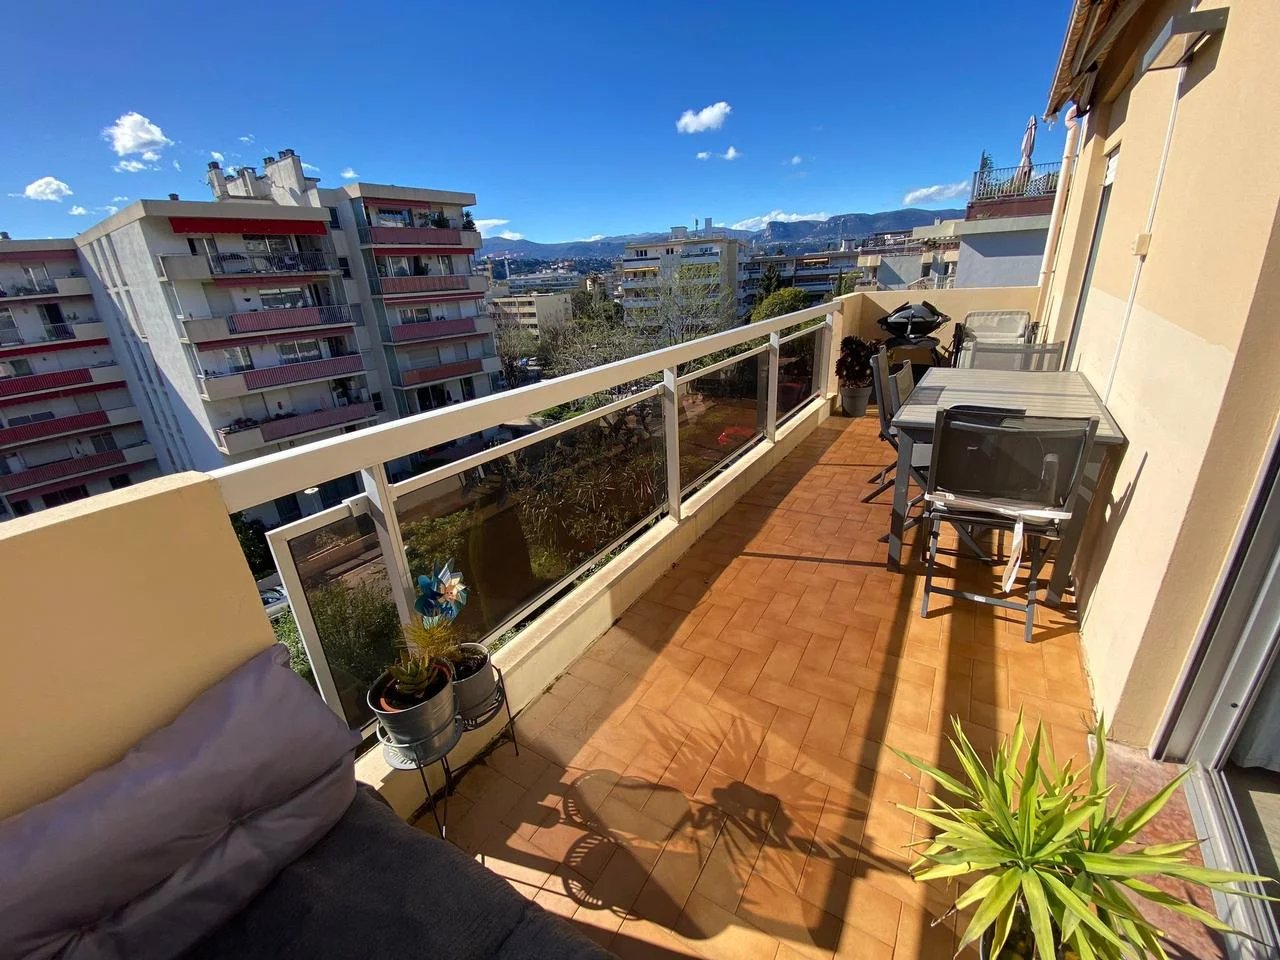 Appartement  3 Locali 62.41m2  In vendita   349 000 €